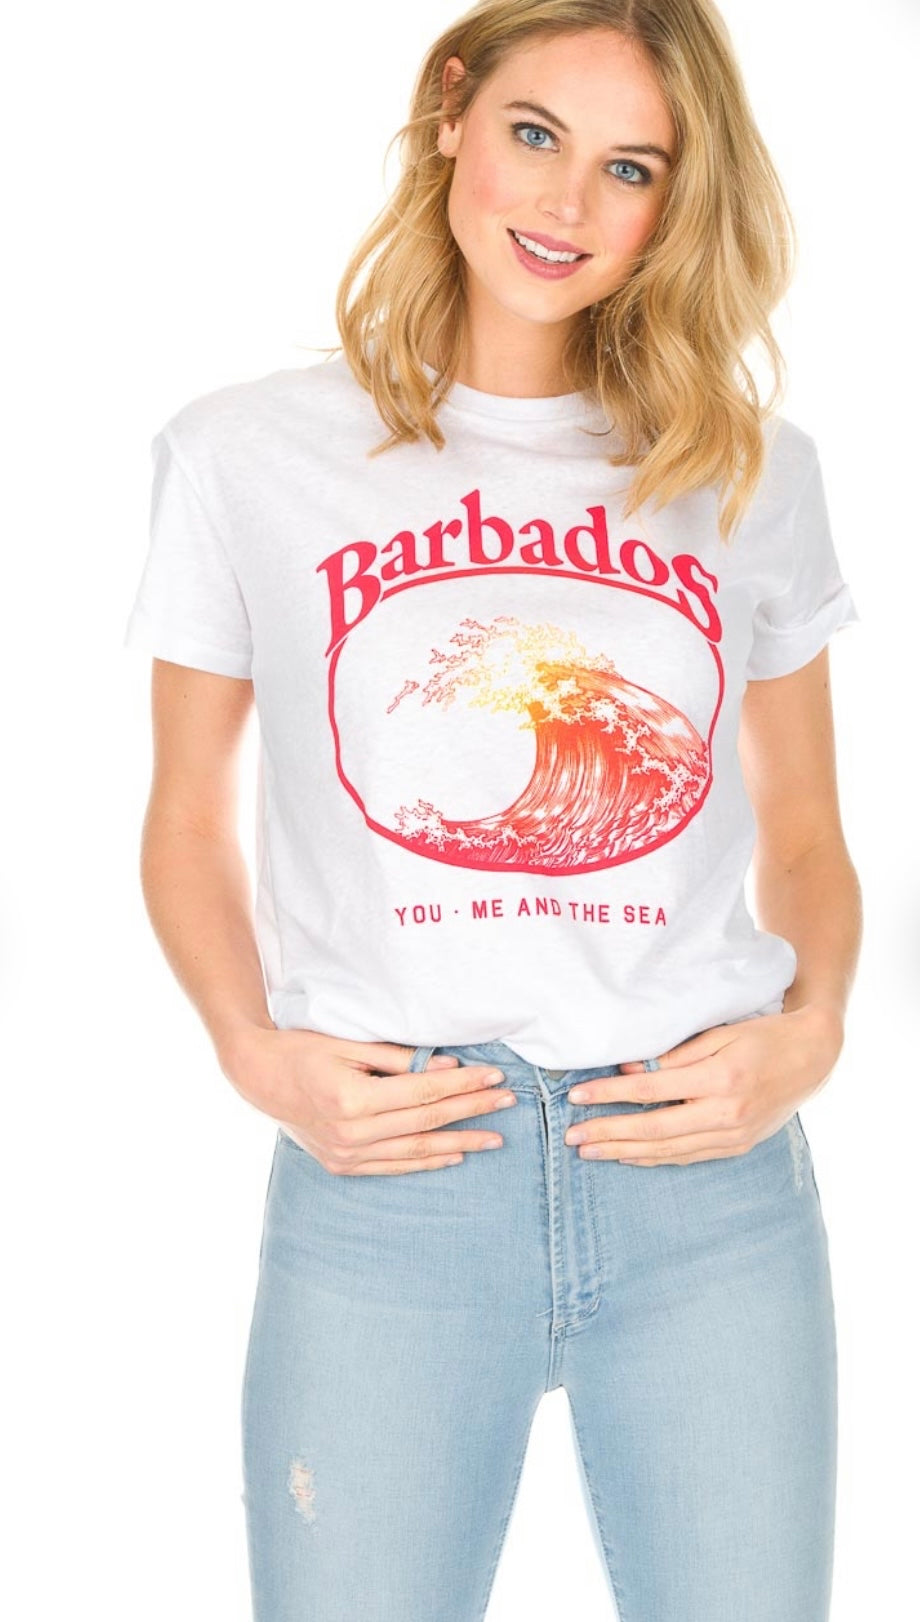 ZOE KARSSEN
T-shirt Barbados |white